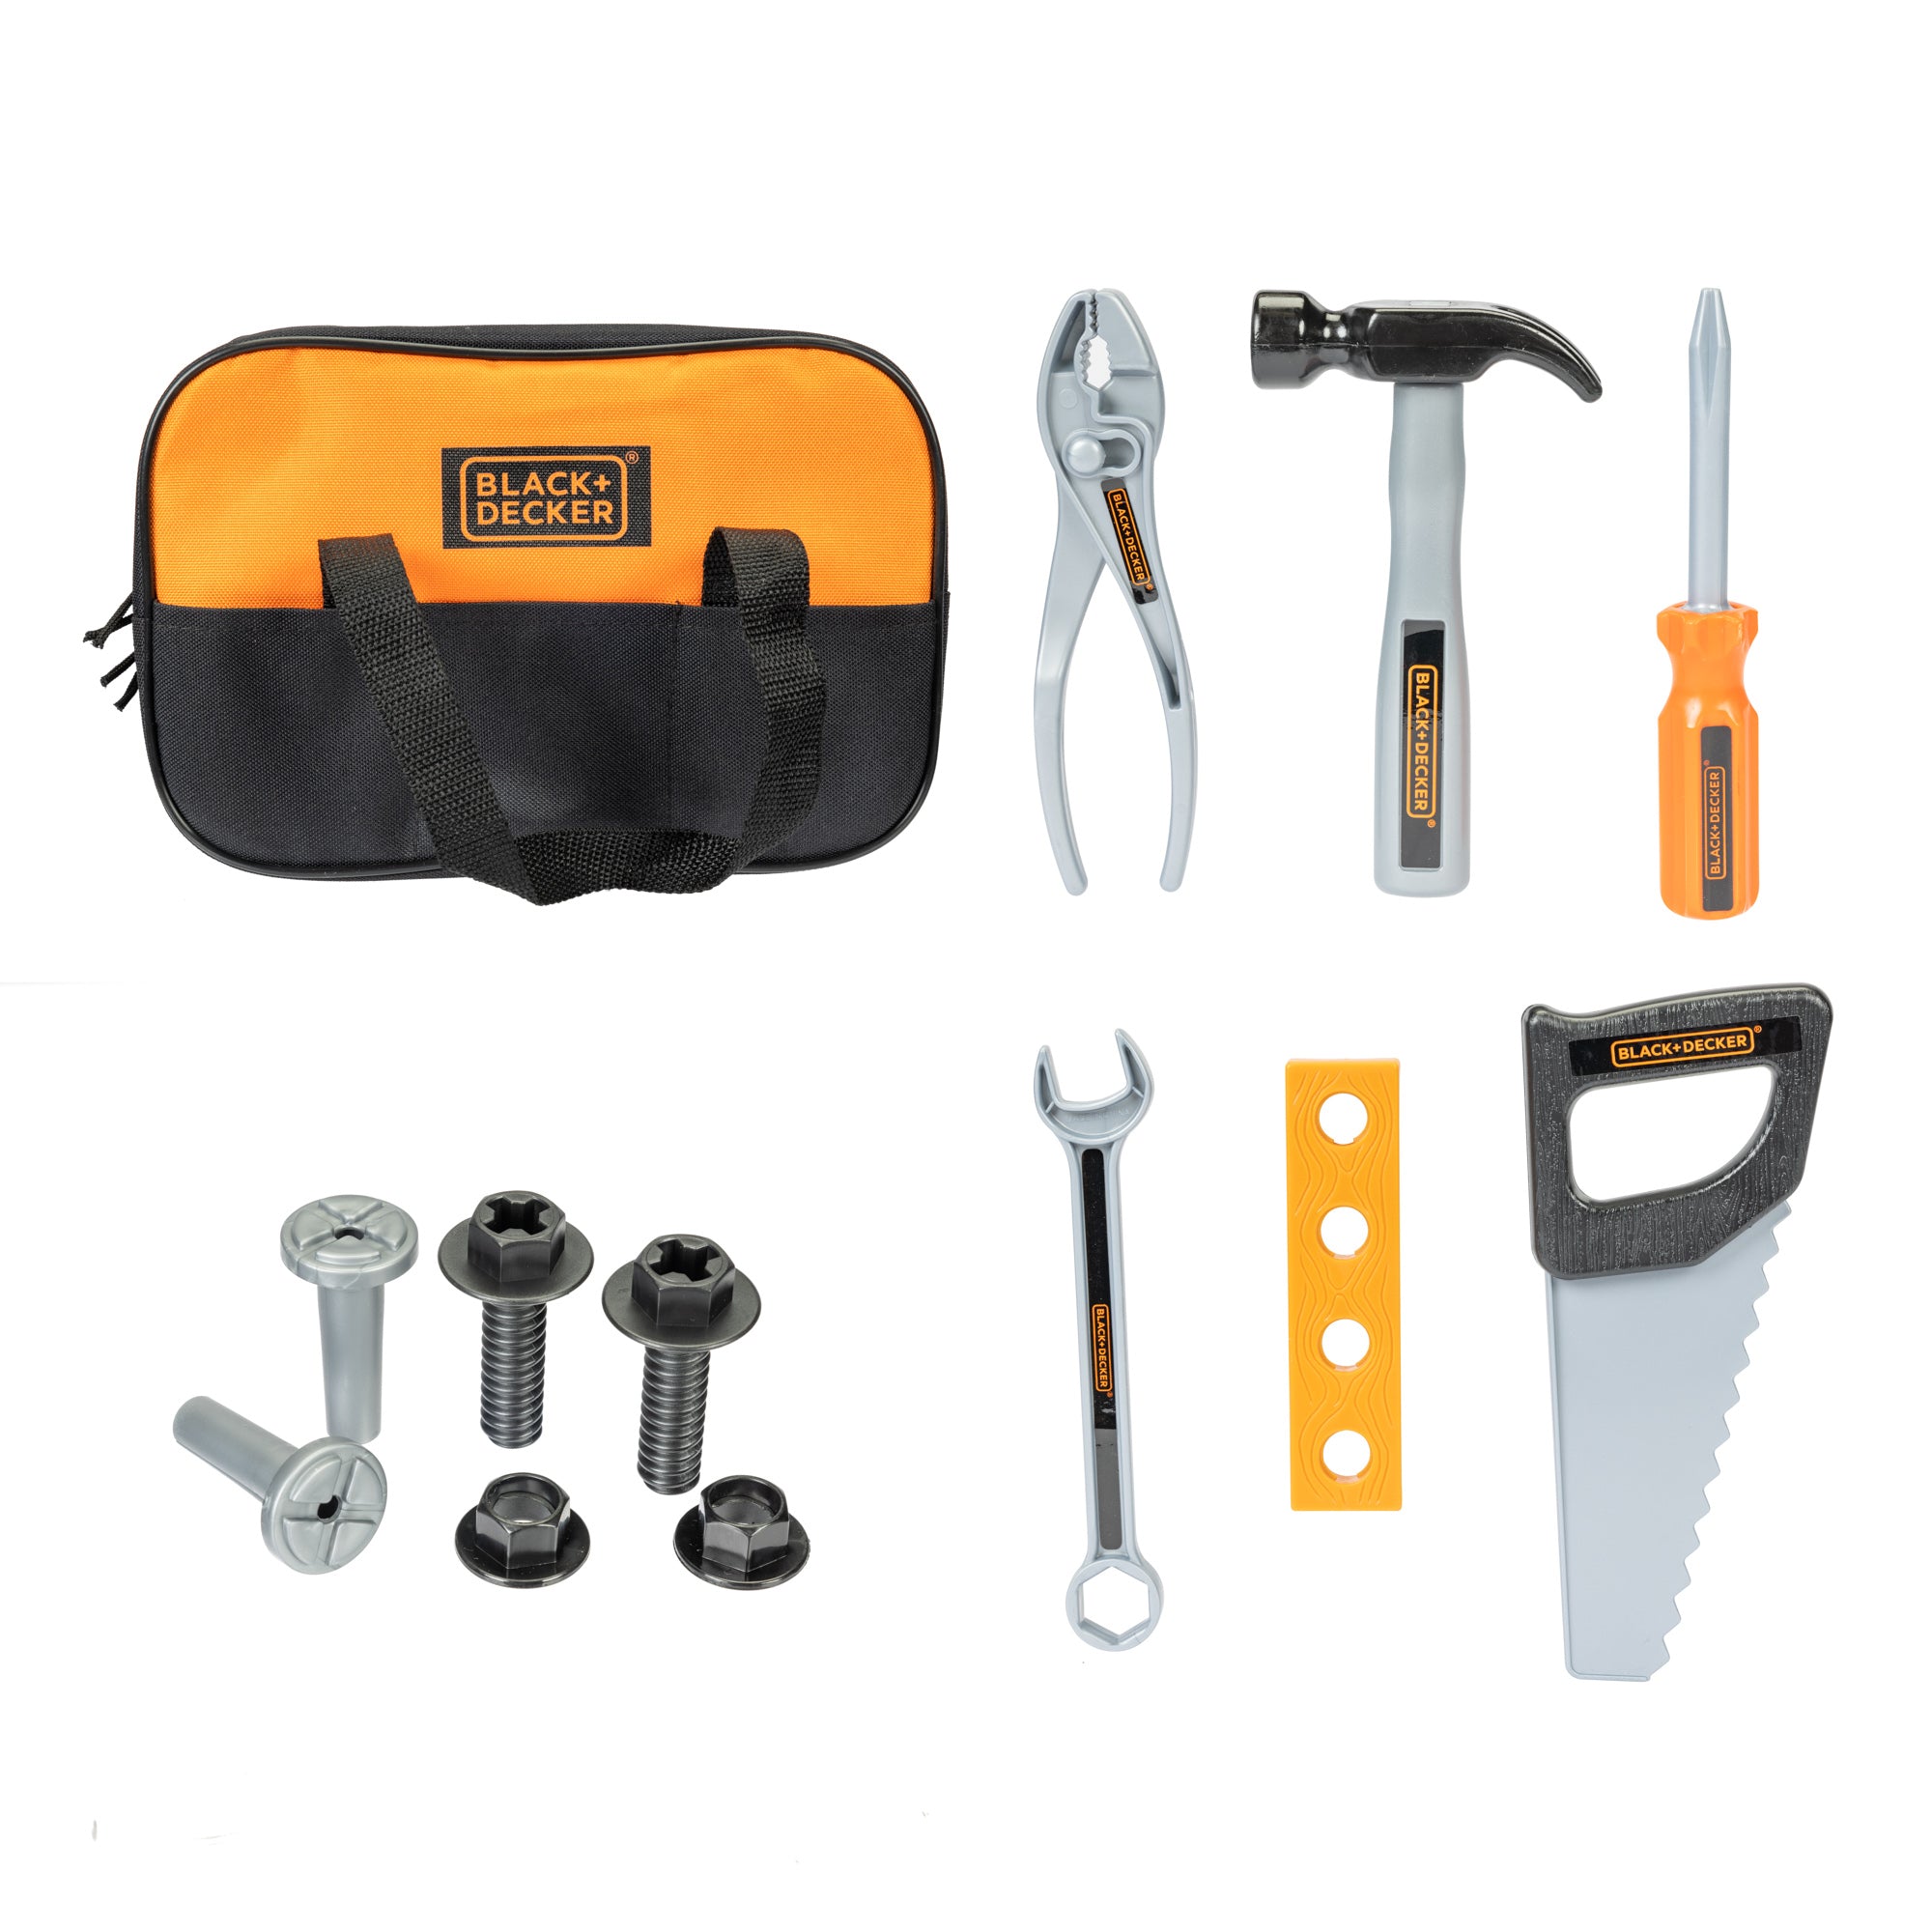 Jakks- Black & Decker Lil Builder Tool Set - 15 Tools & Accessories Pl –